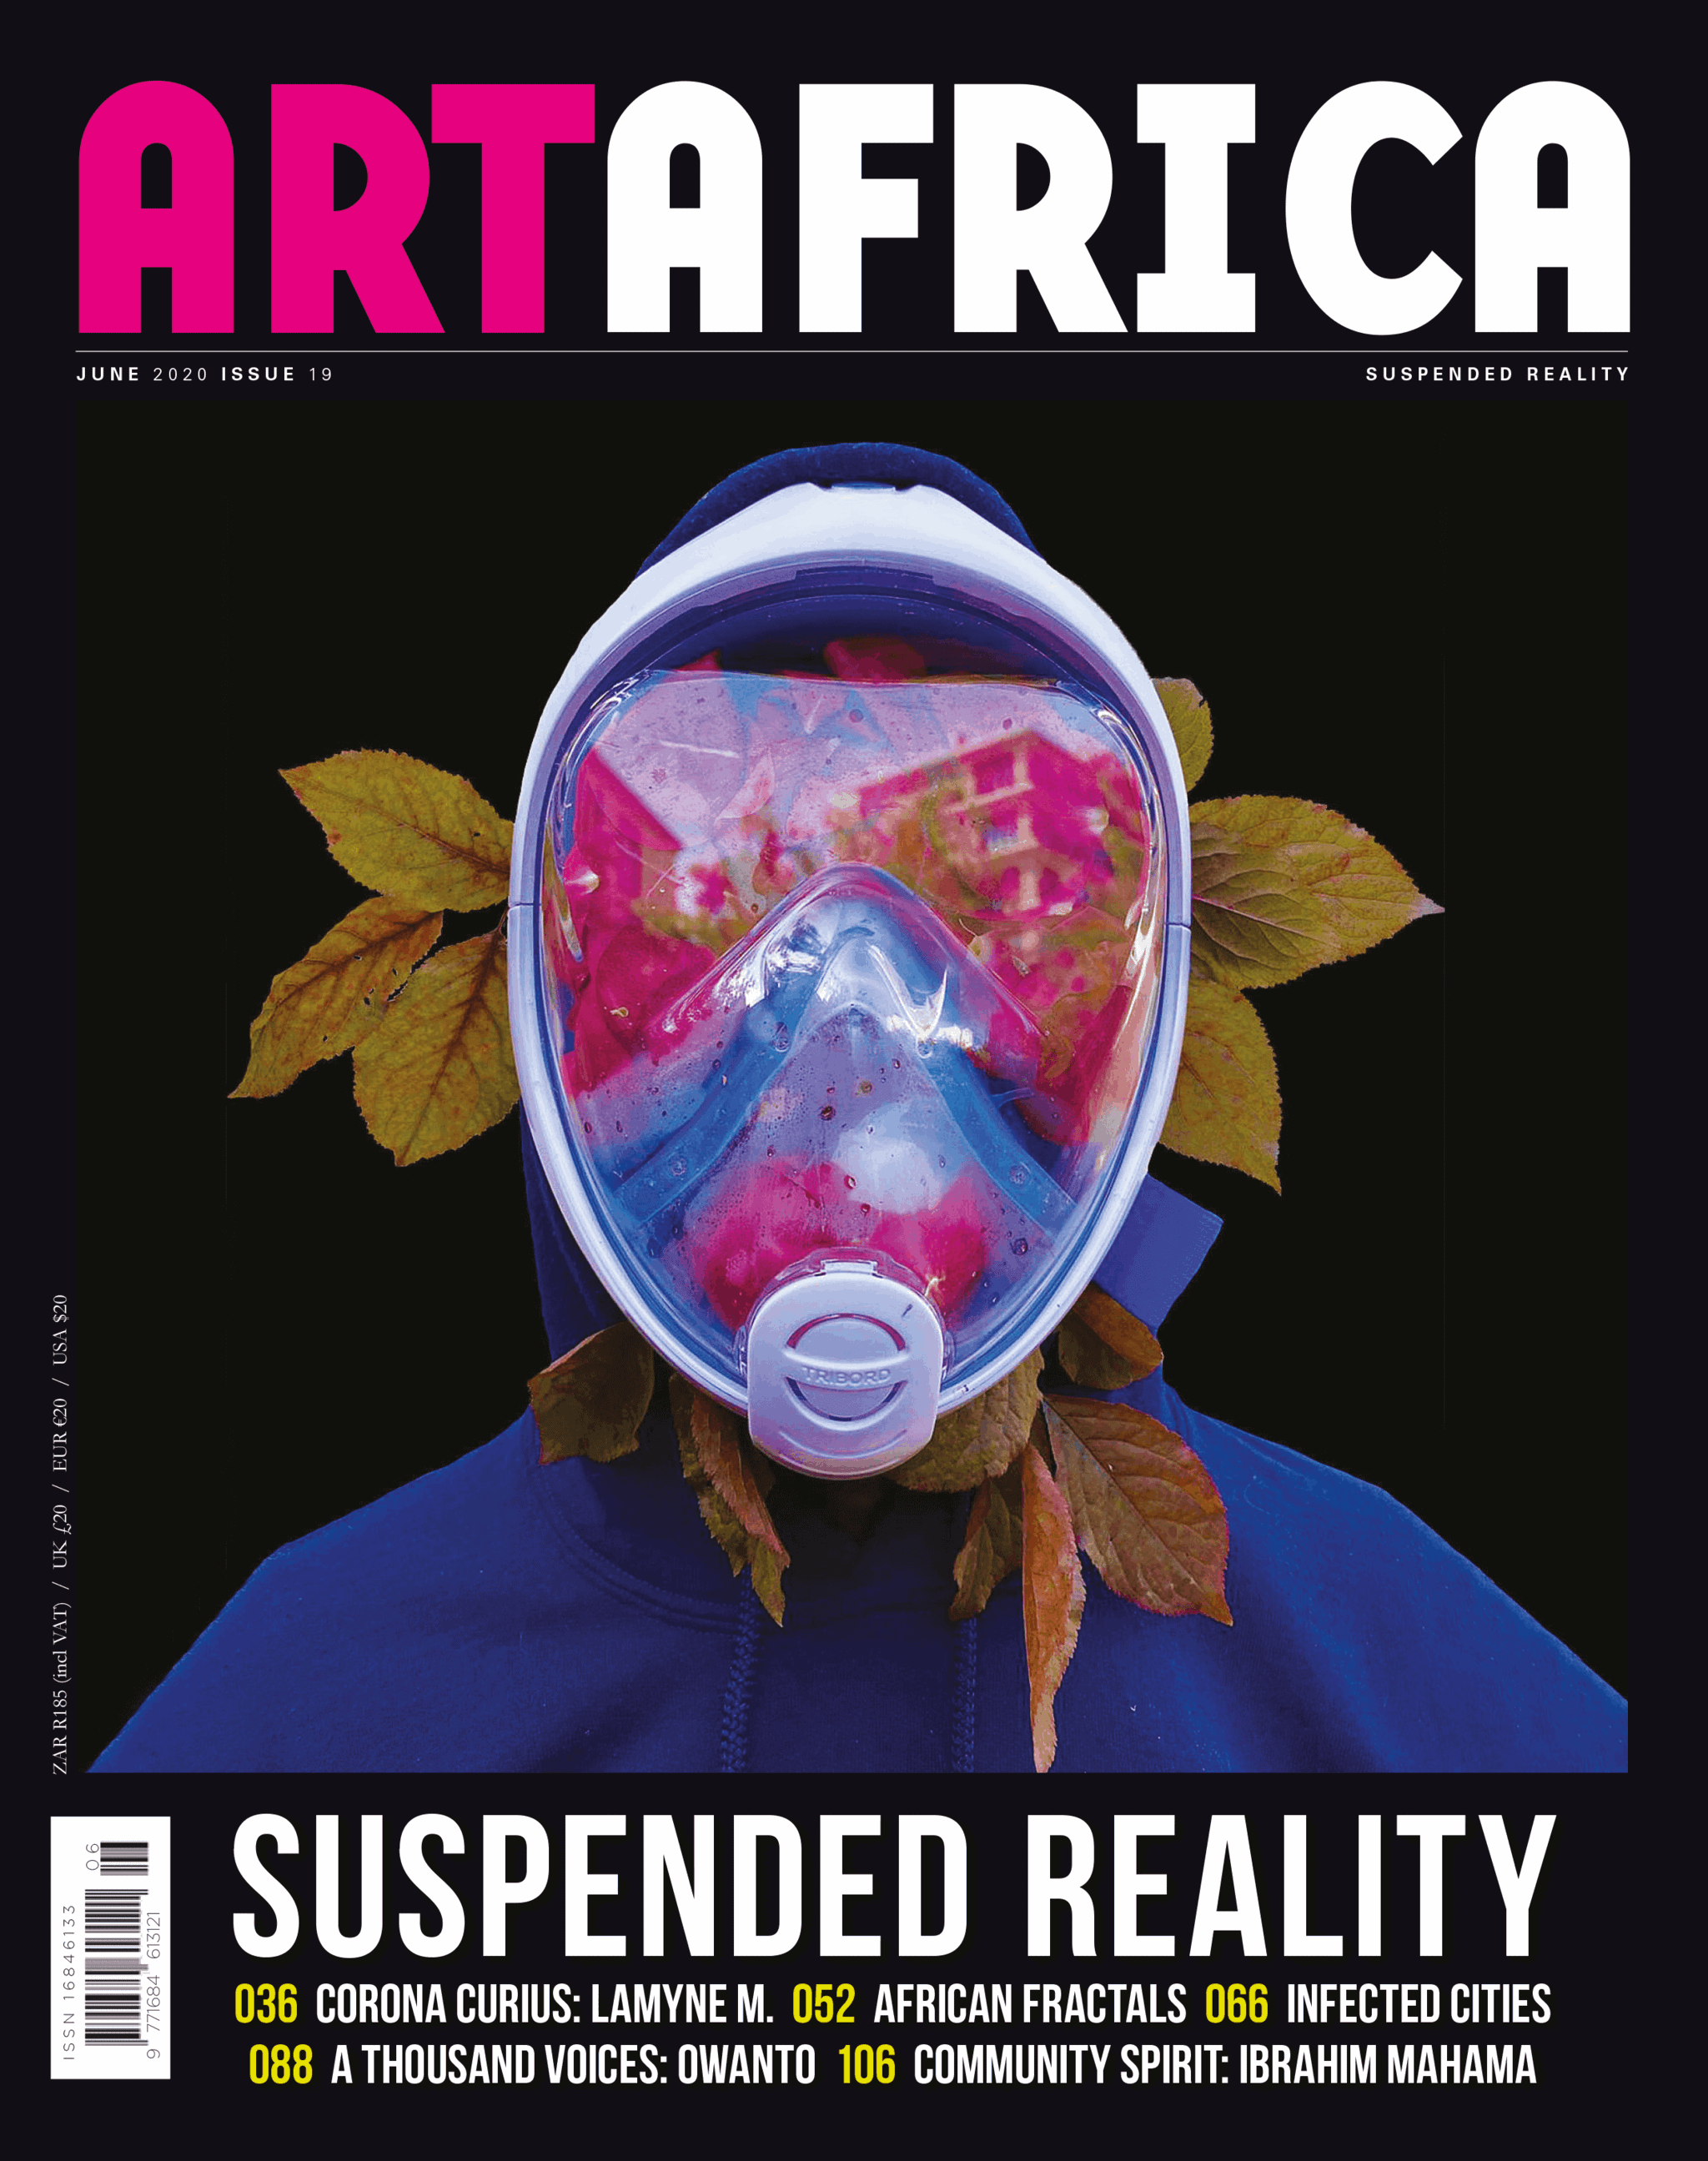 ART AFRICA Issue 19